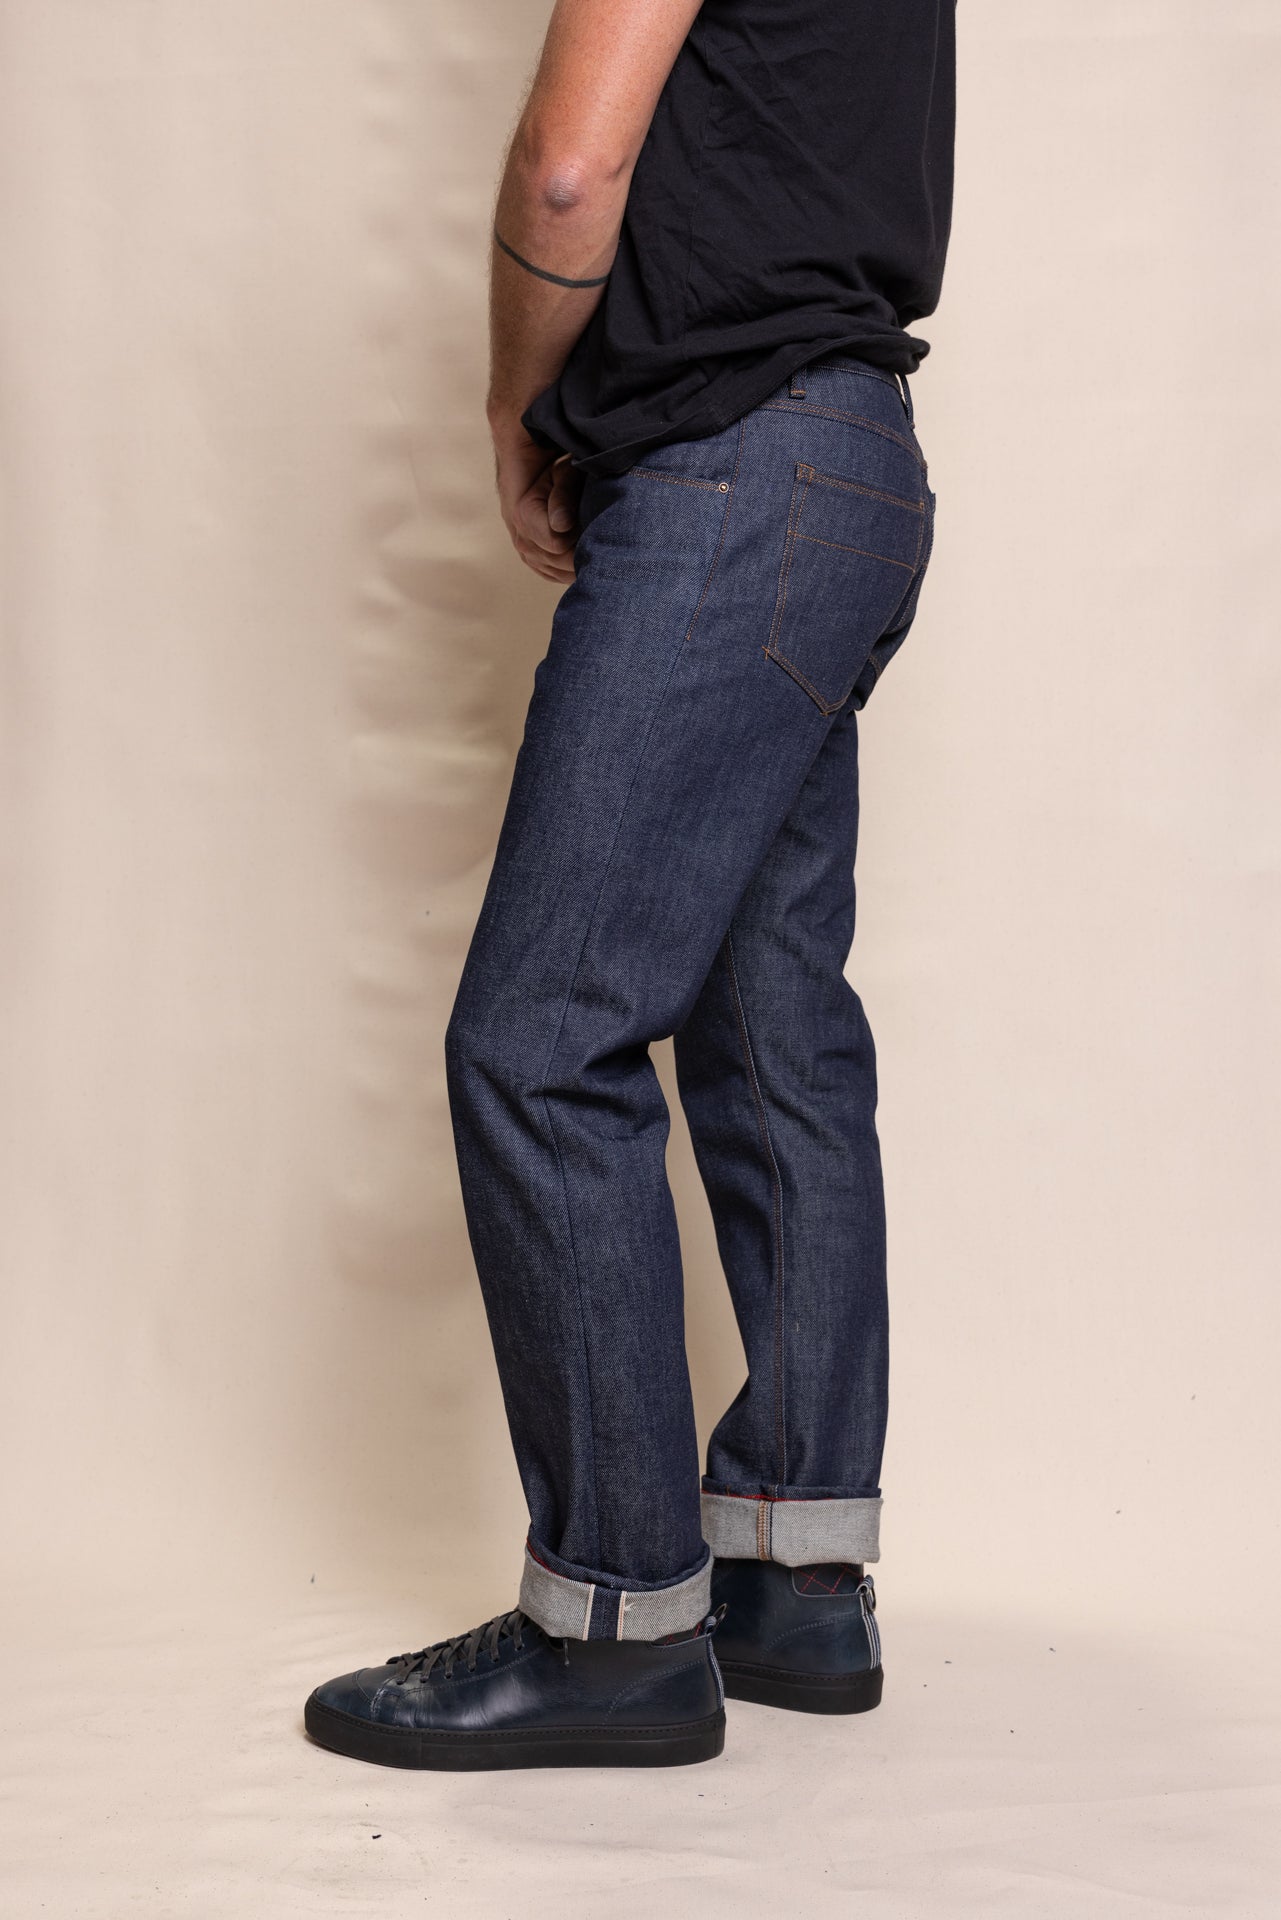 RRR Cone Denim Jeans in vintage wash - Western Cut 